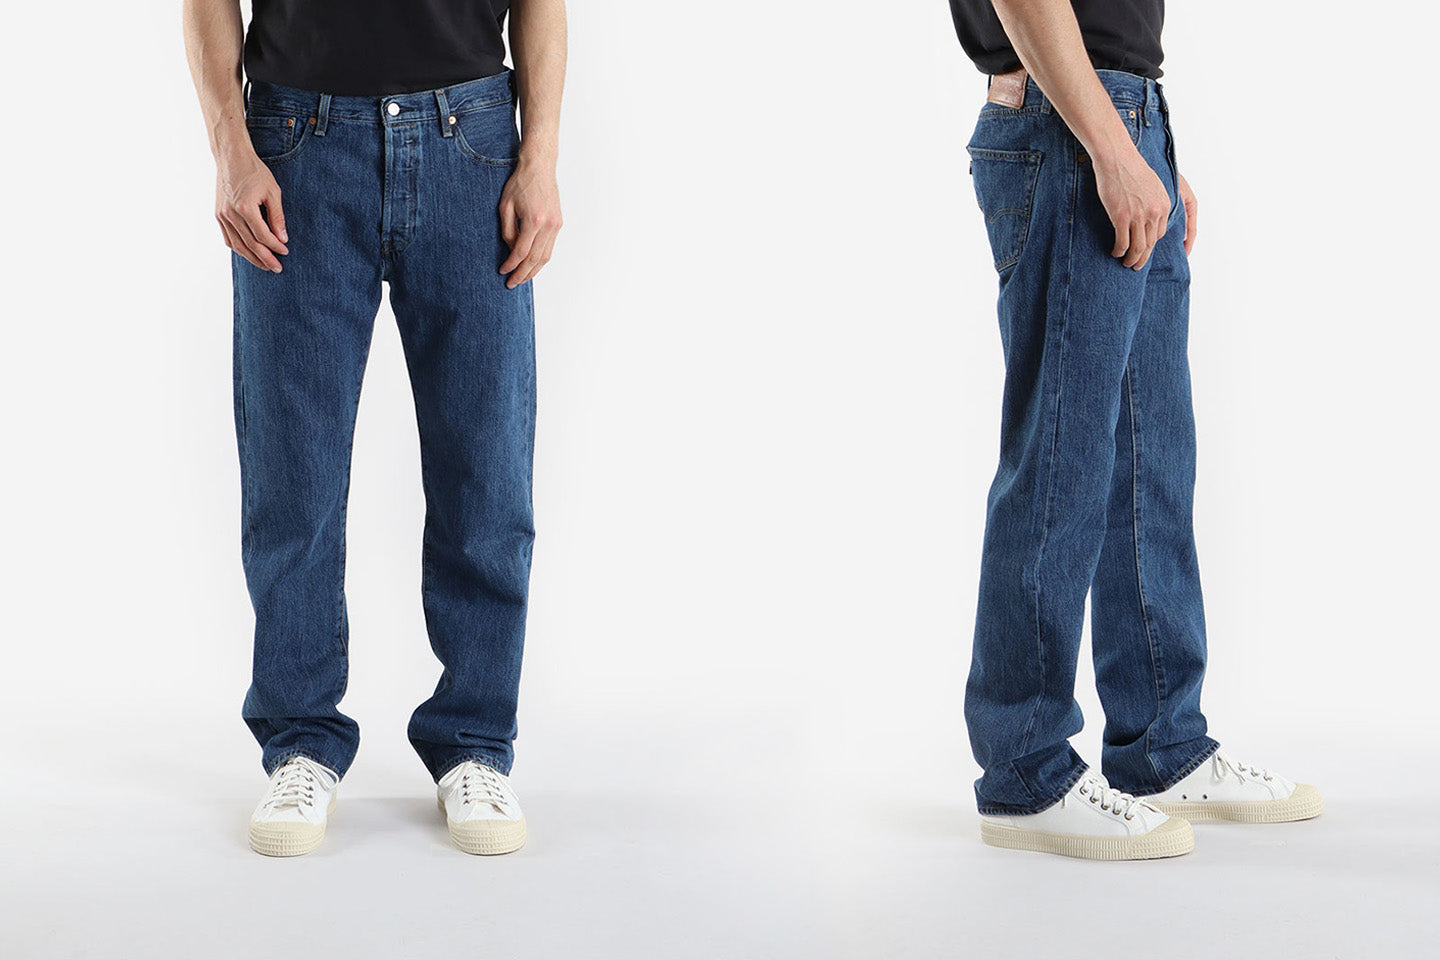 dictator Socialisme Kroniek Levi's Fit Guide | How do Levi's Jeans Fit? – Urban Industry